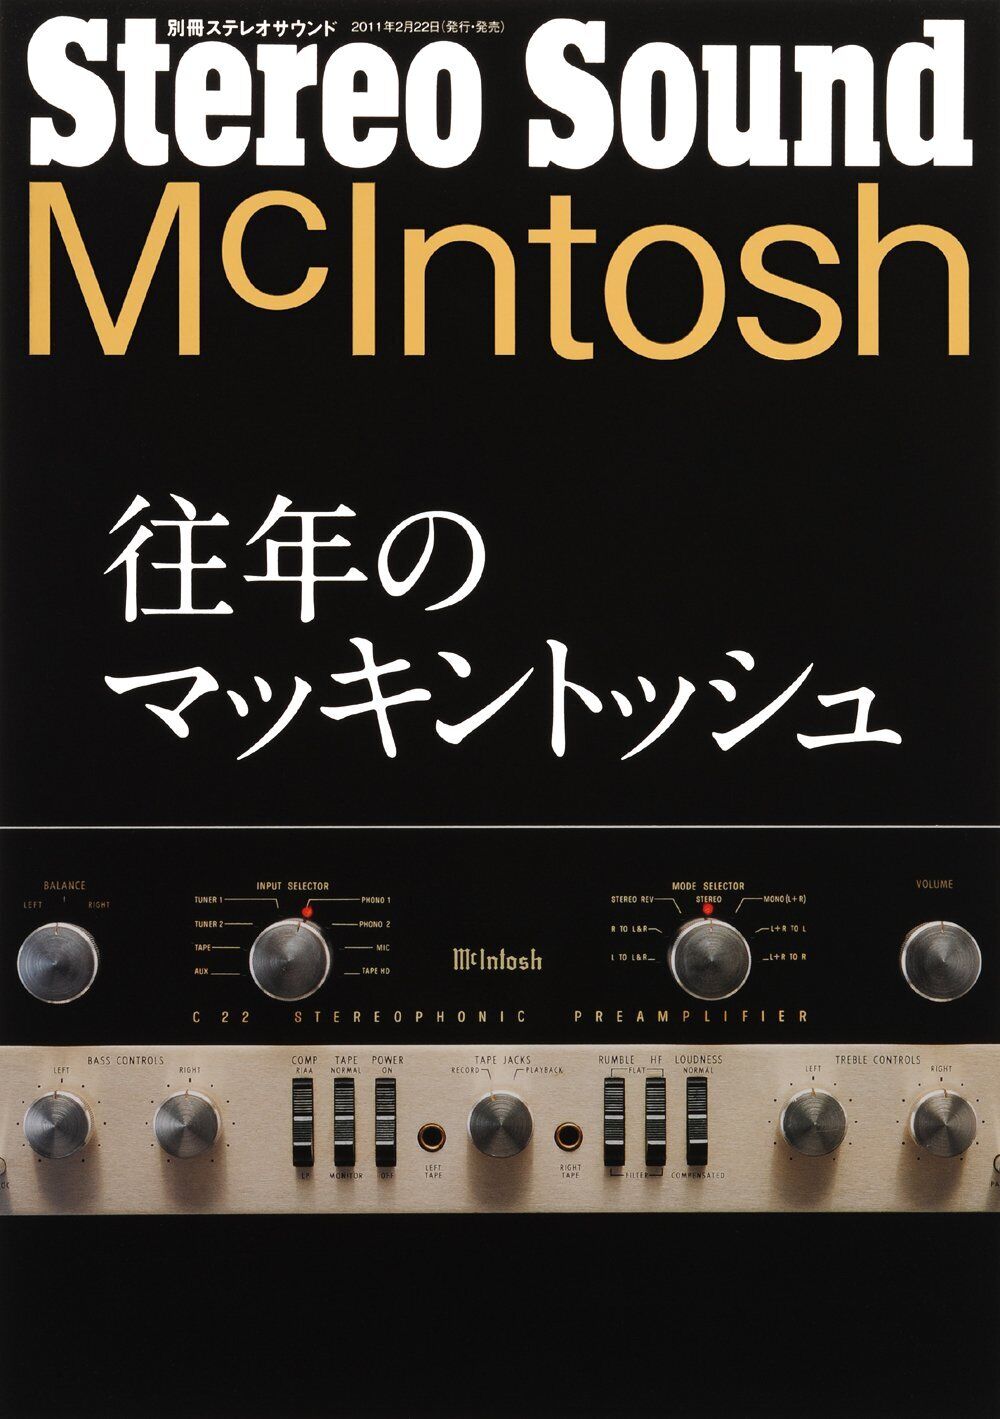 Stereo Sound Mcintosh 2011  Book